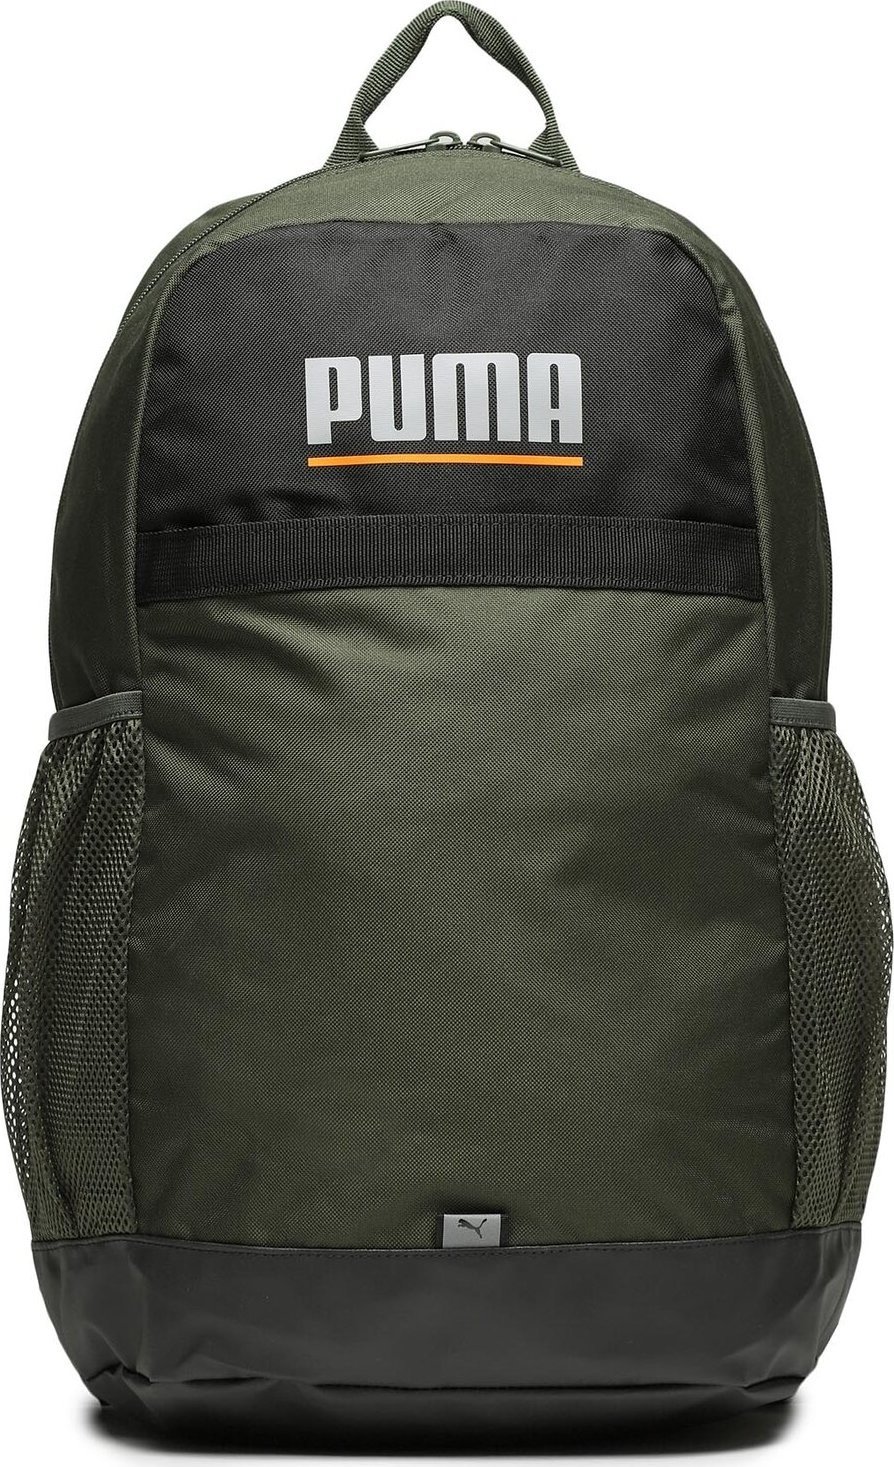 Batoh Puma Plus Backpack 079615 07 Myrtle